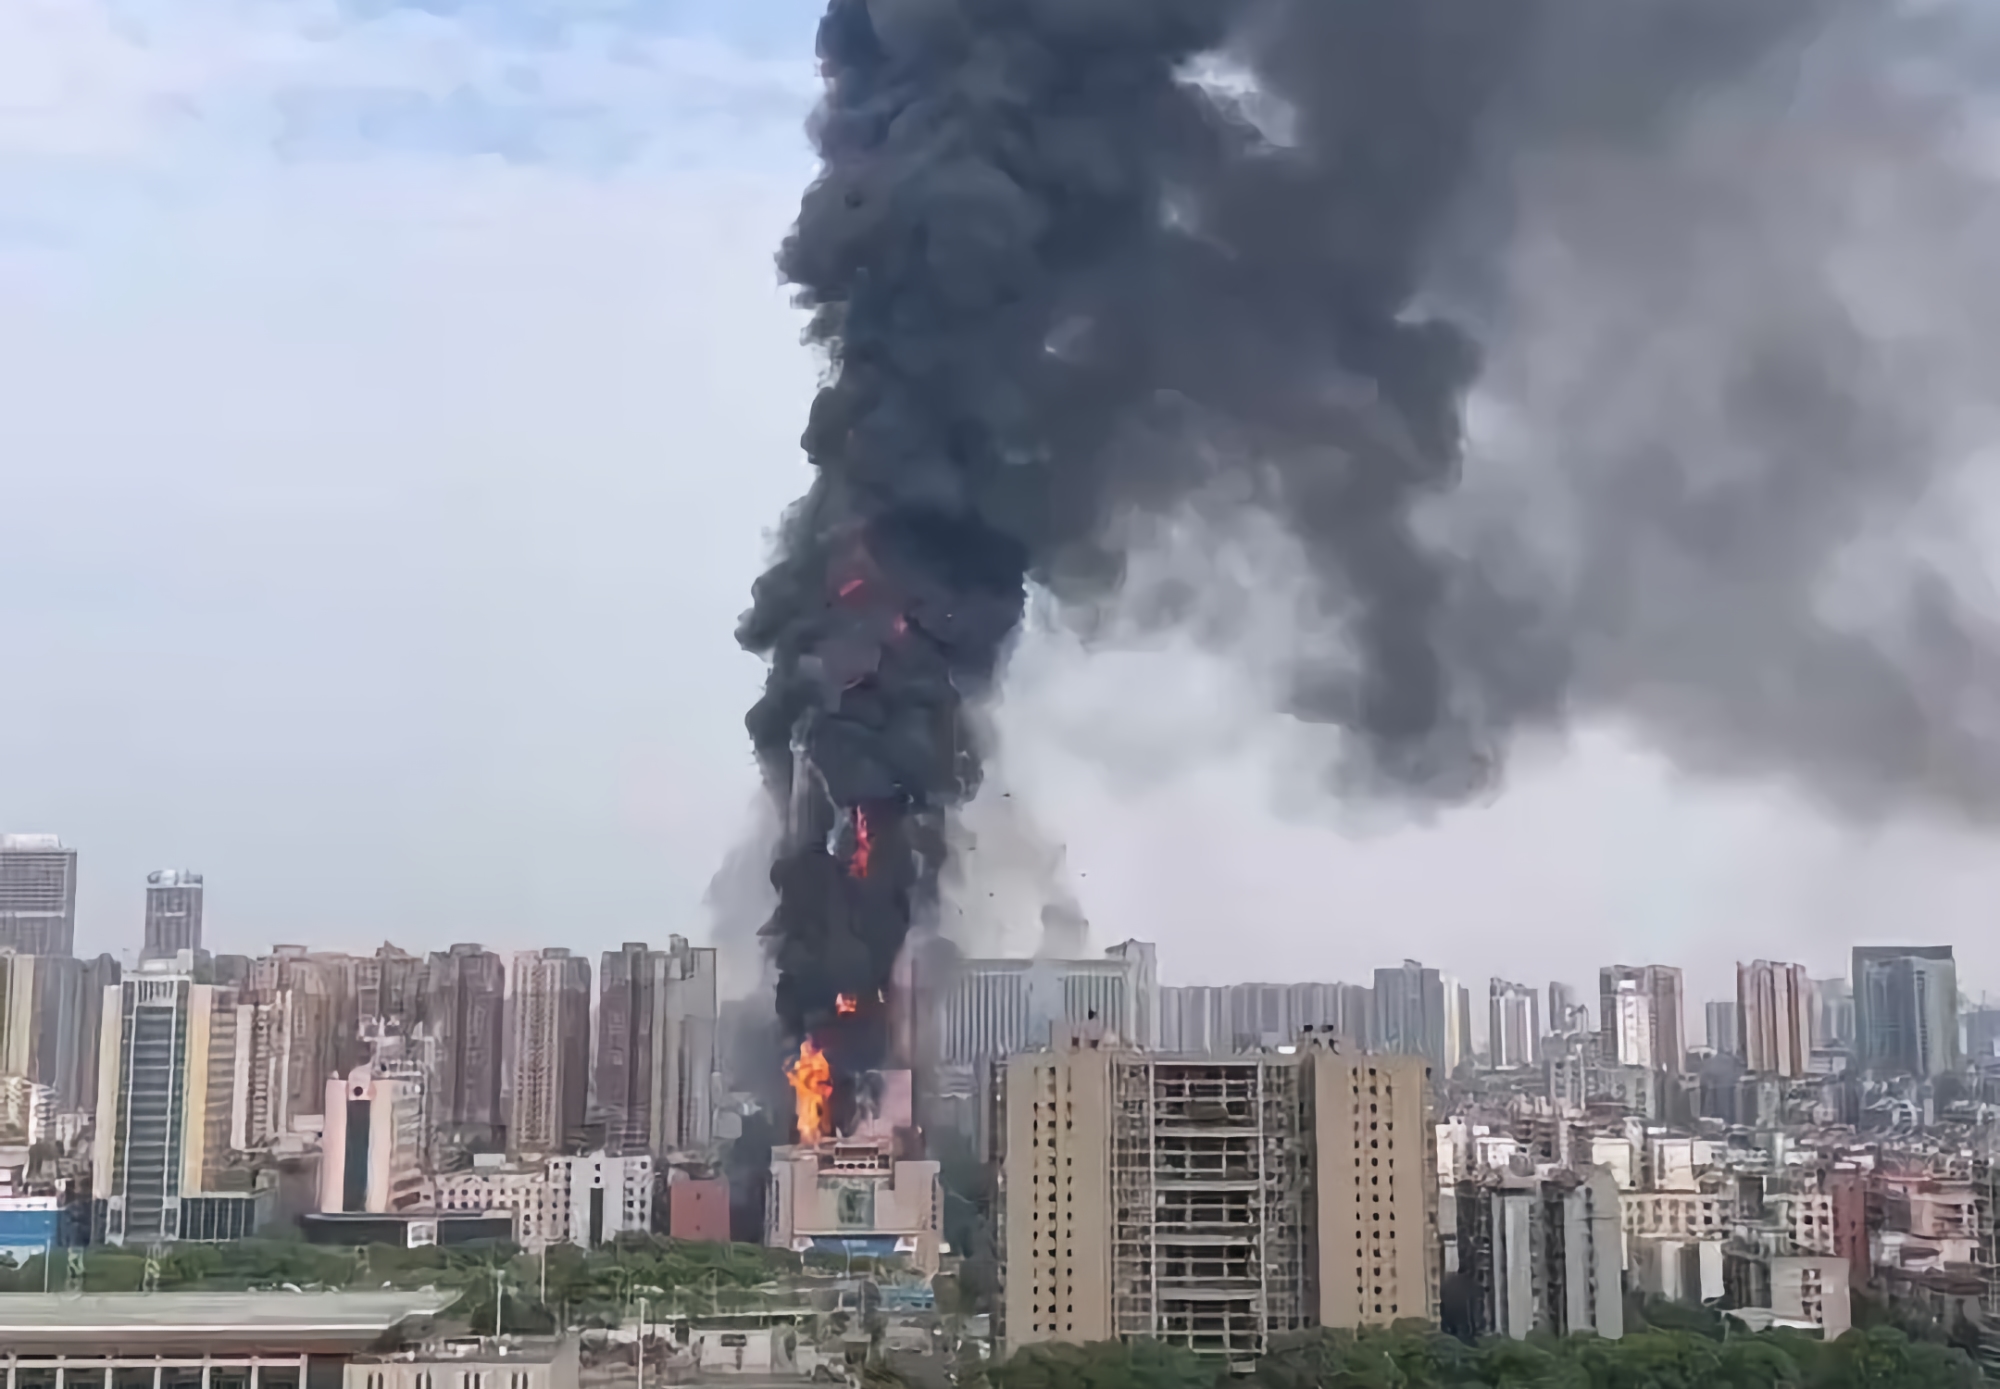 El rascacielos de China Telecom ardió en 20 minutos, almacenaba 35 toneladas de combustible para servidores